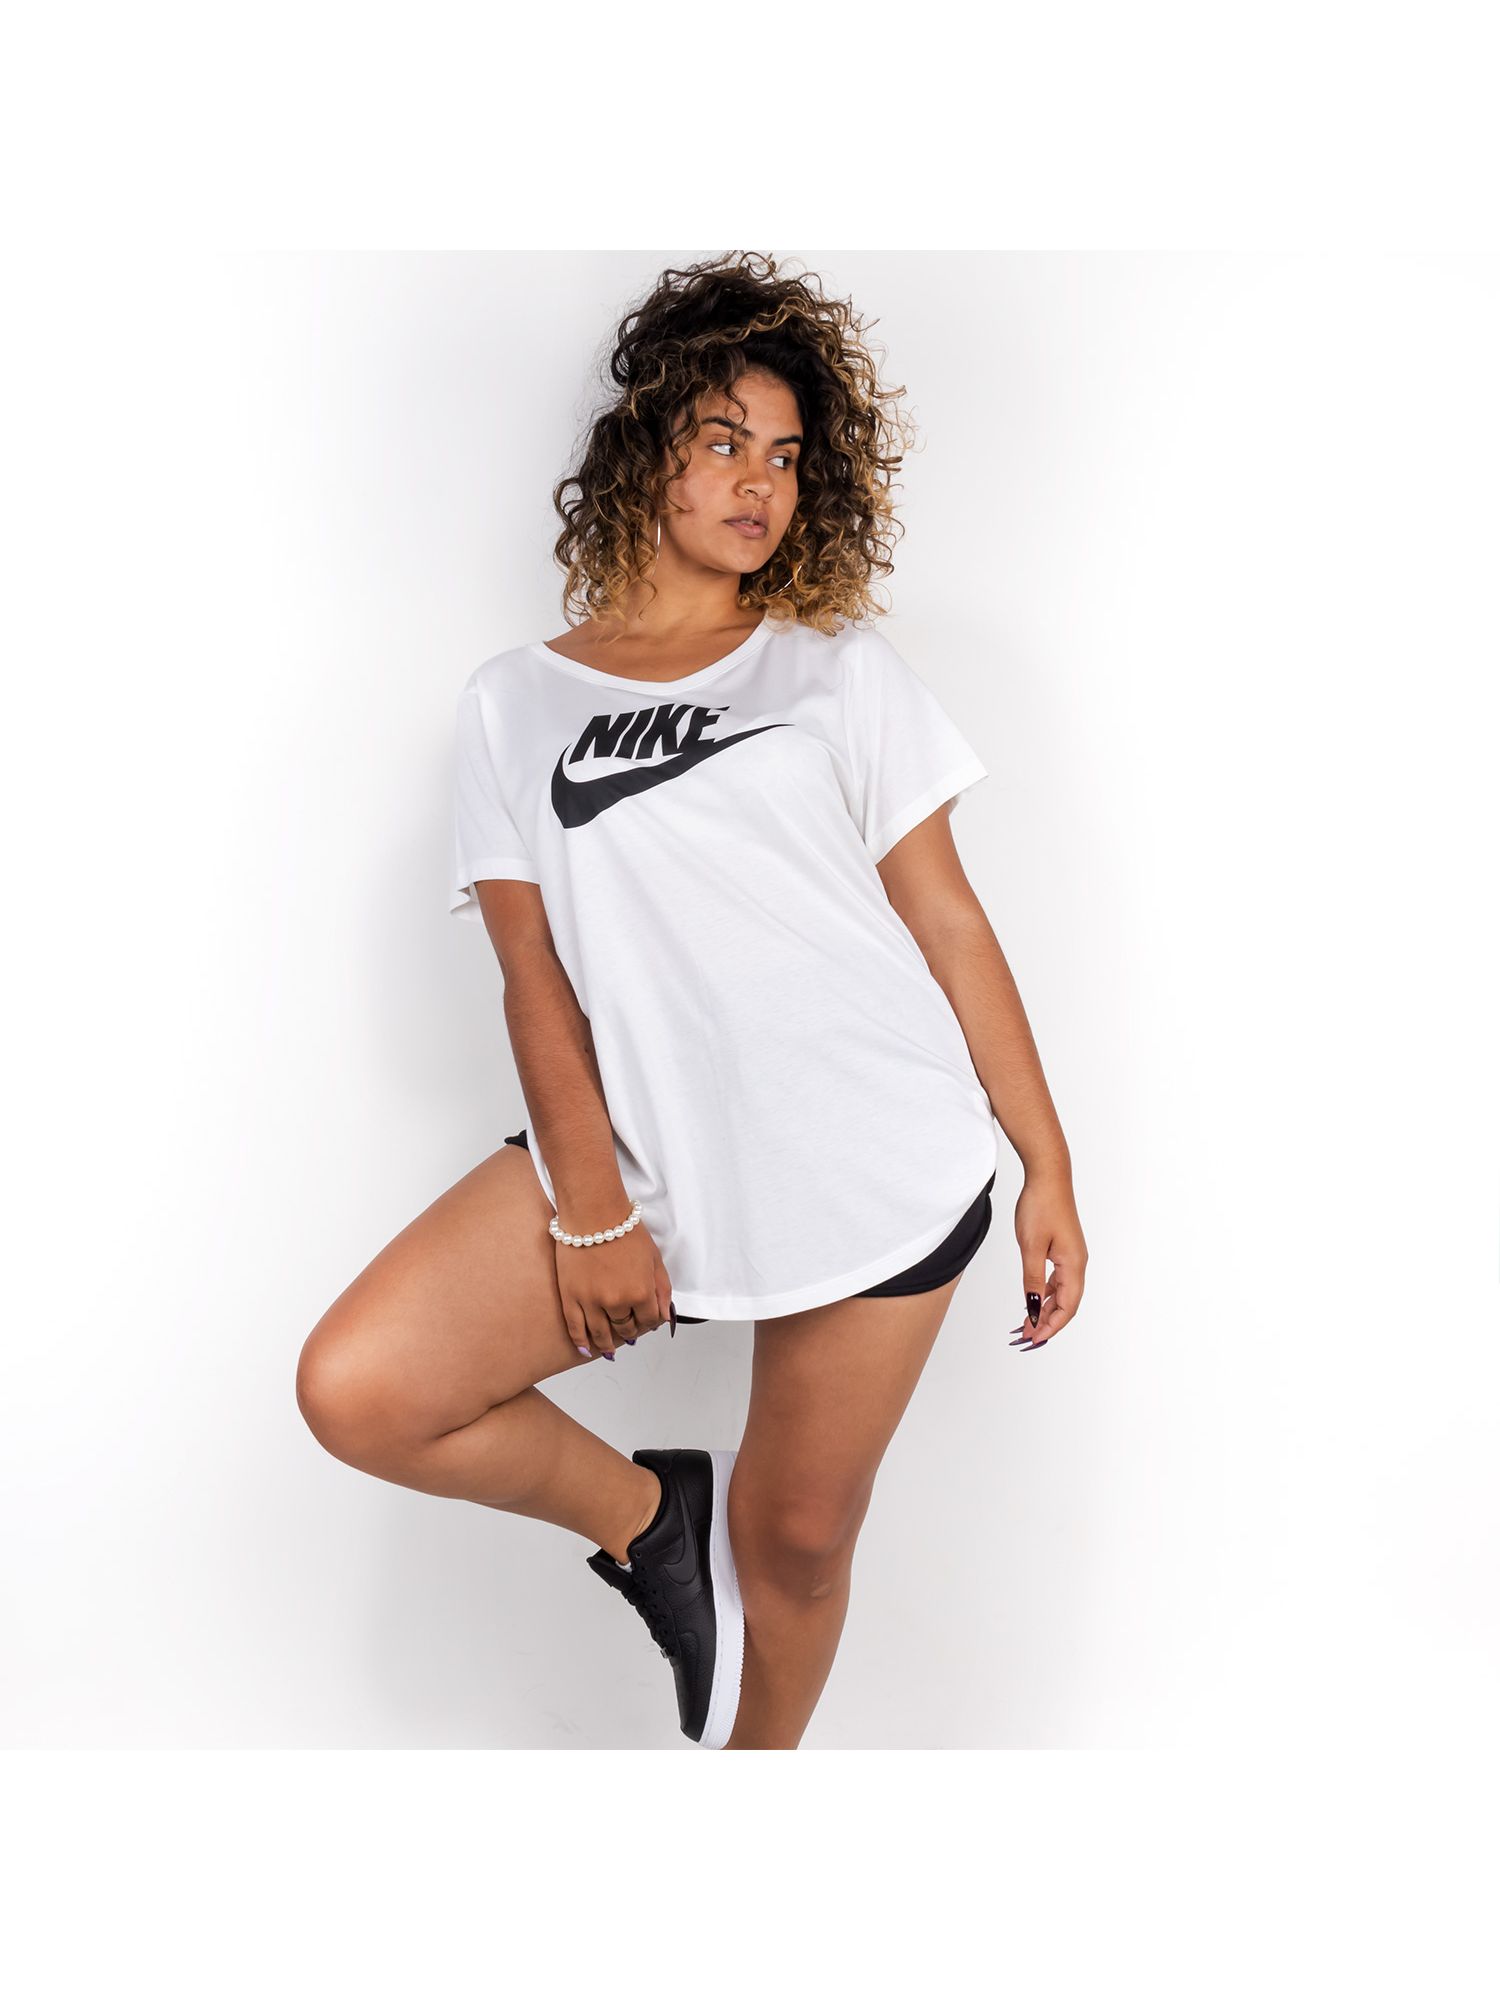 Camiseta Nike Sportswear Fiber Plus Size Feminina - Branco